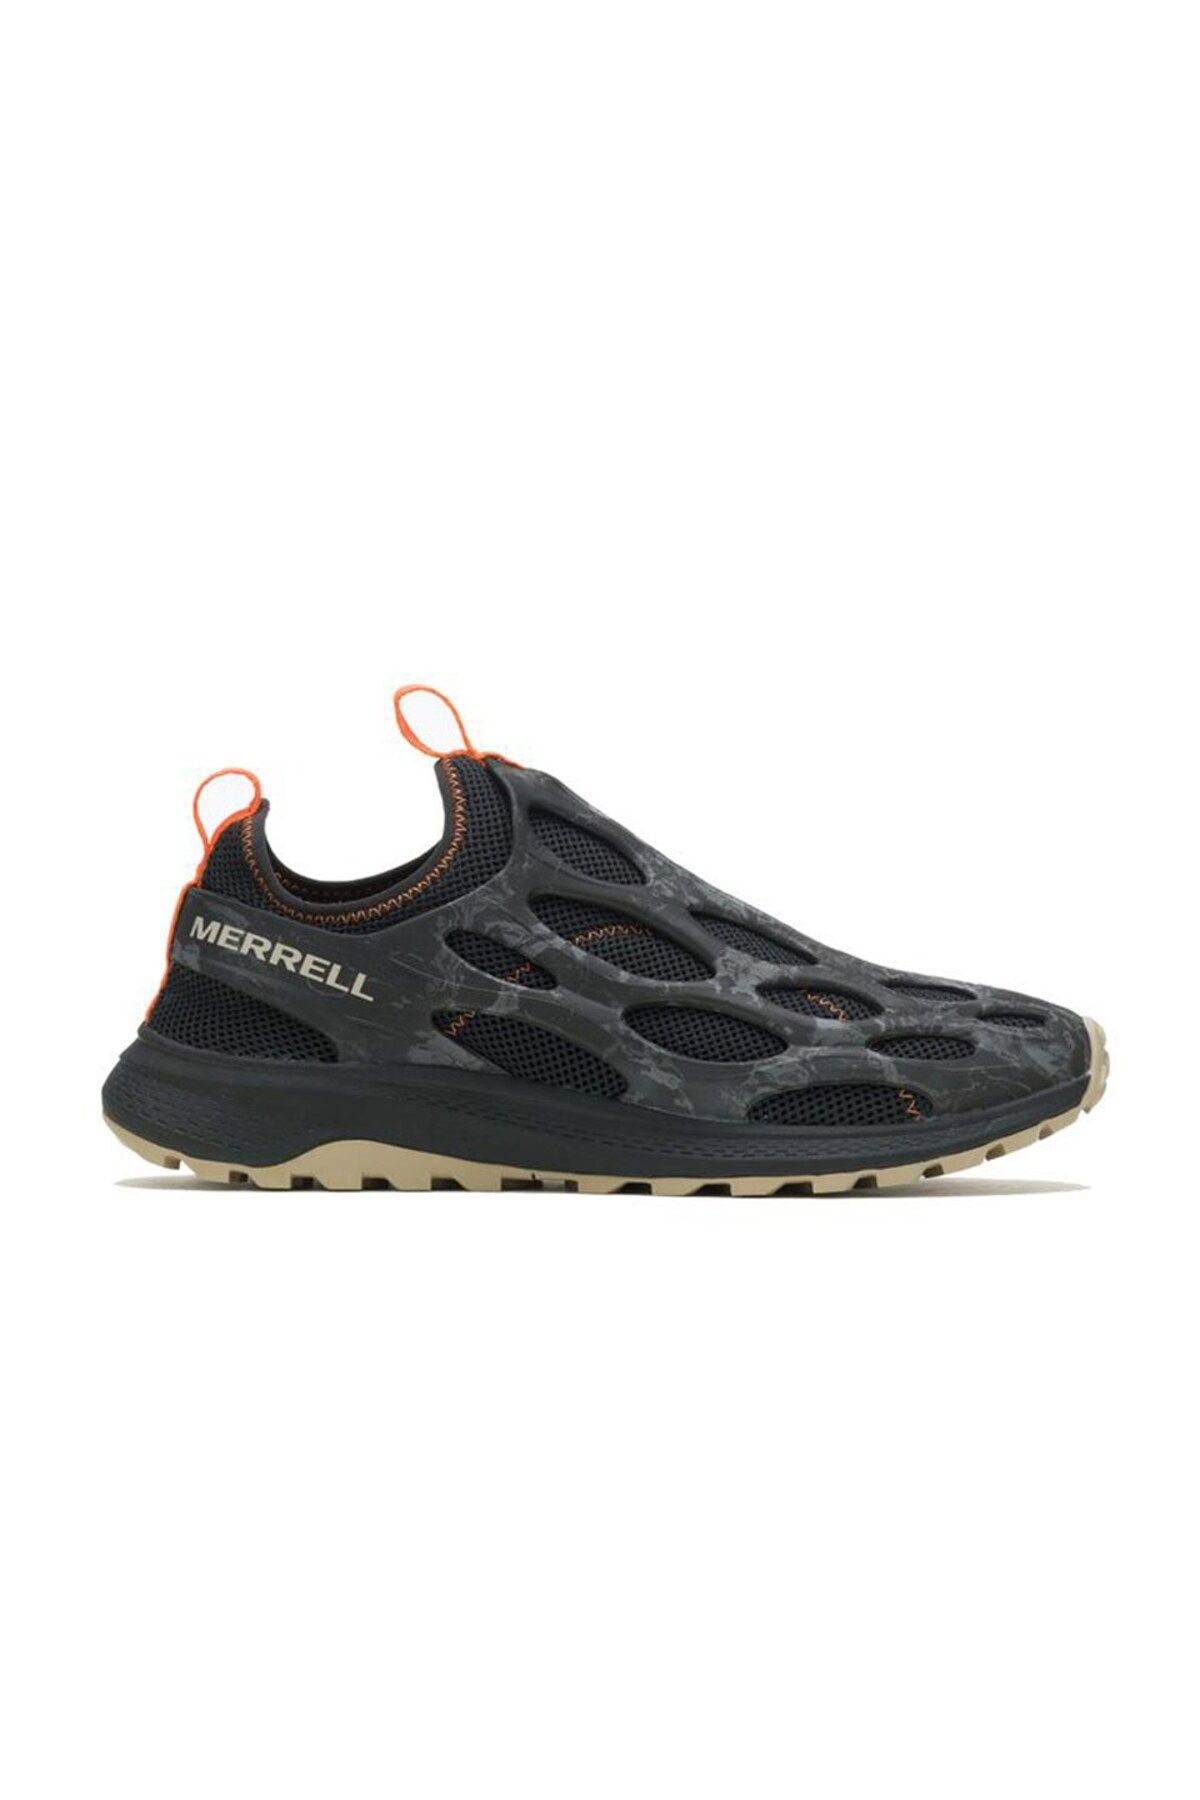 Merrell Hydro Runner Erkek Outdoor Ayakkabı J066845 - Siyah